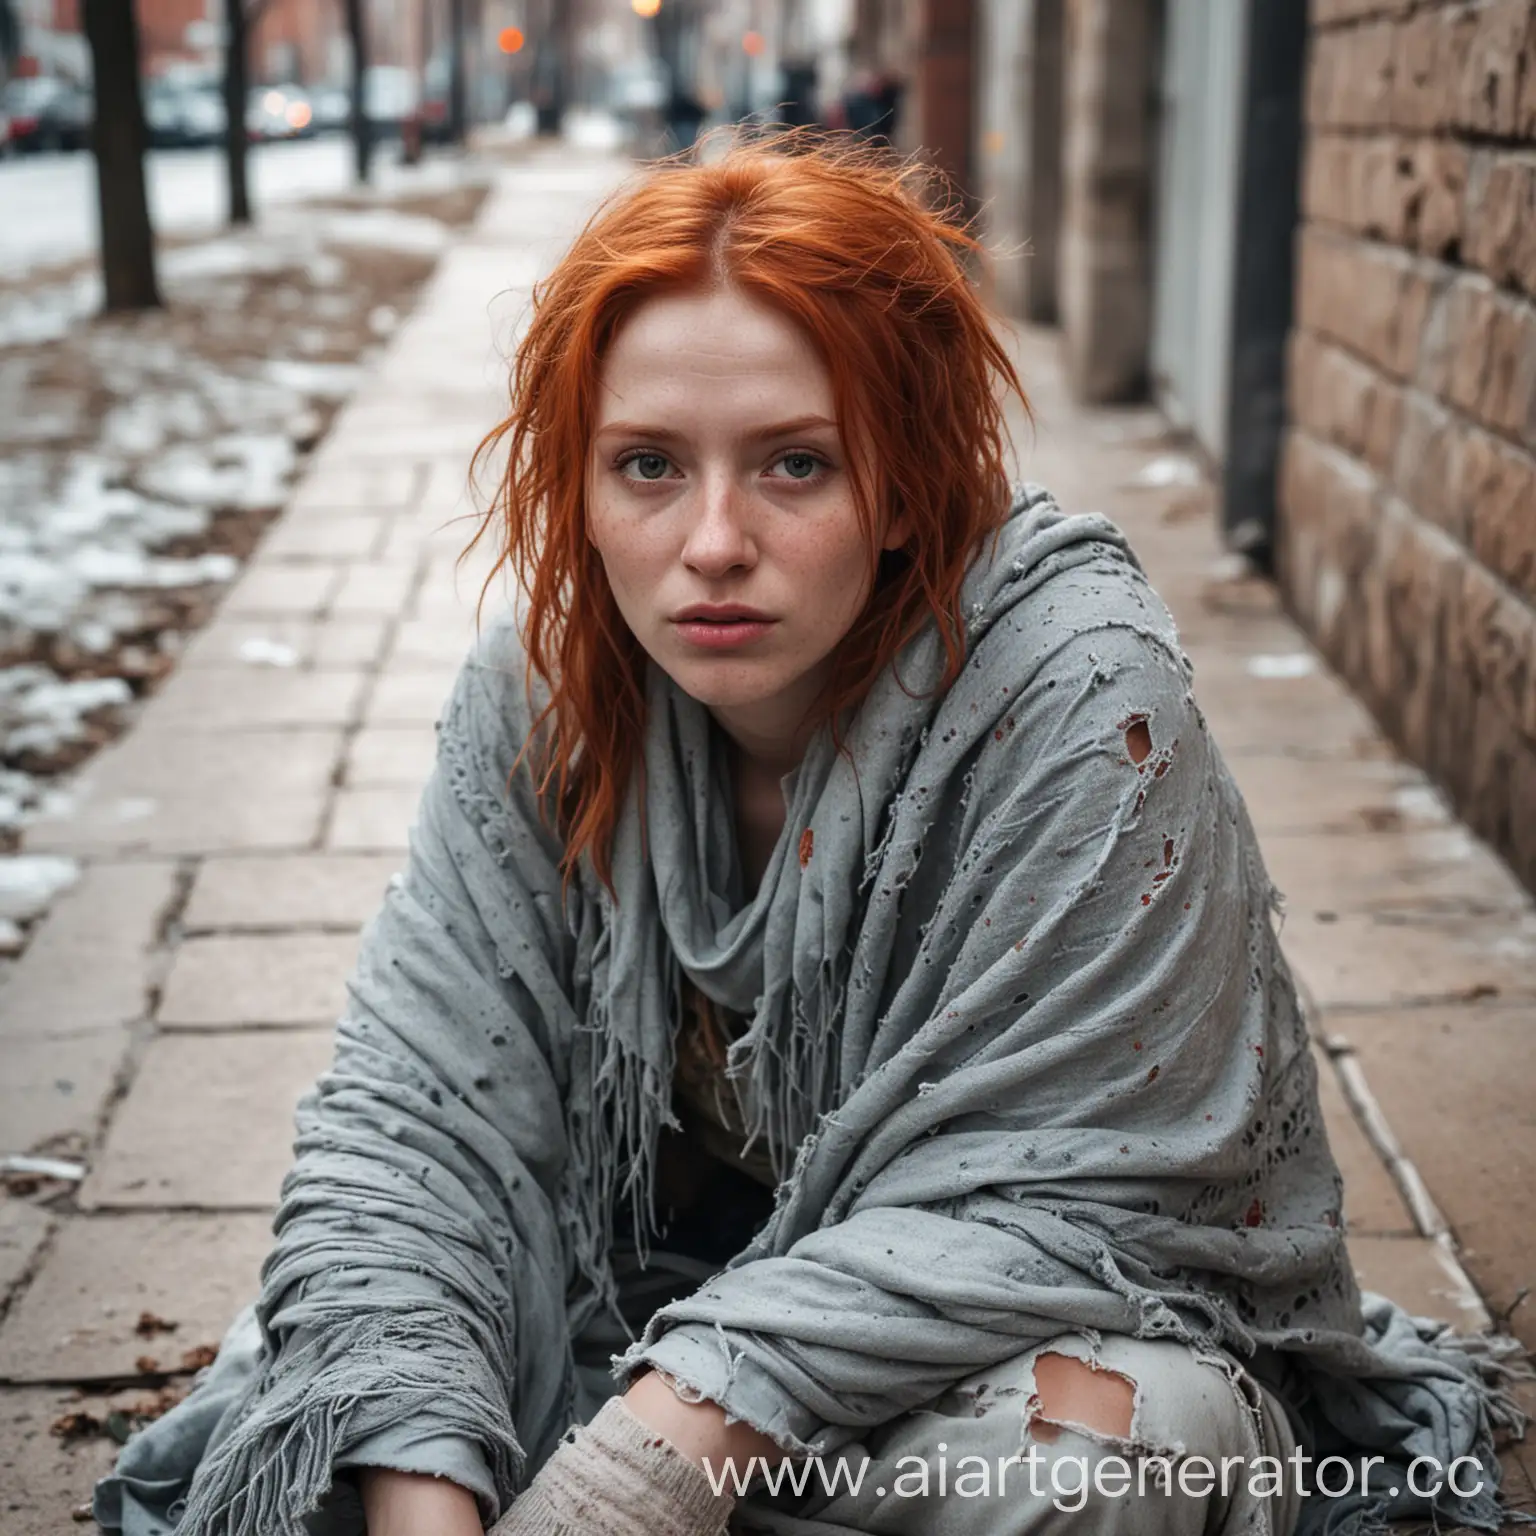 Homeless-Redheaded-Girl-in-Winter-Cold-on-Sidewalk